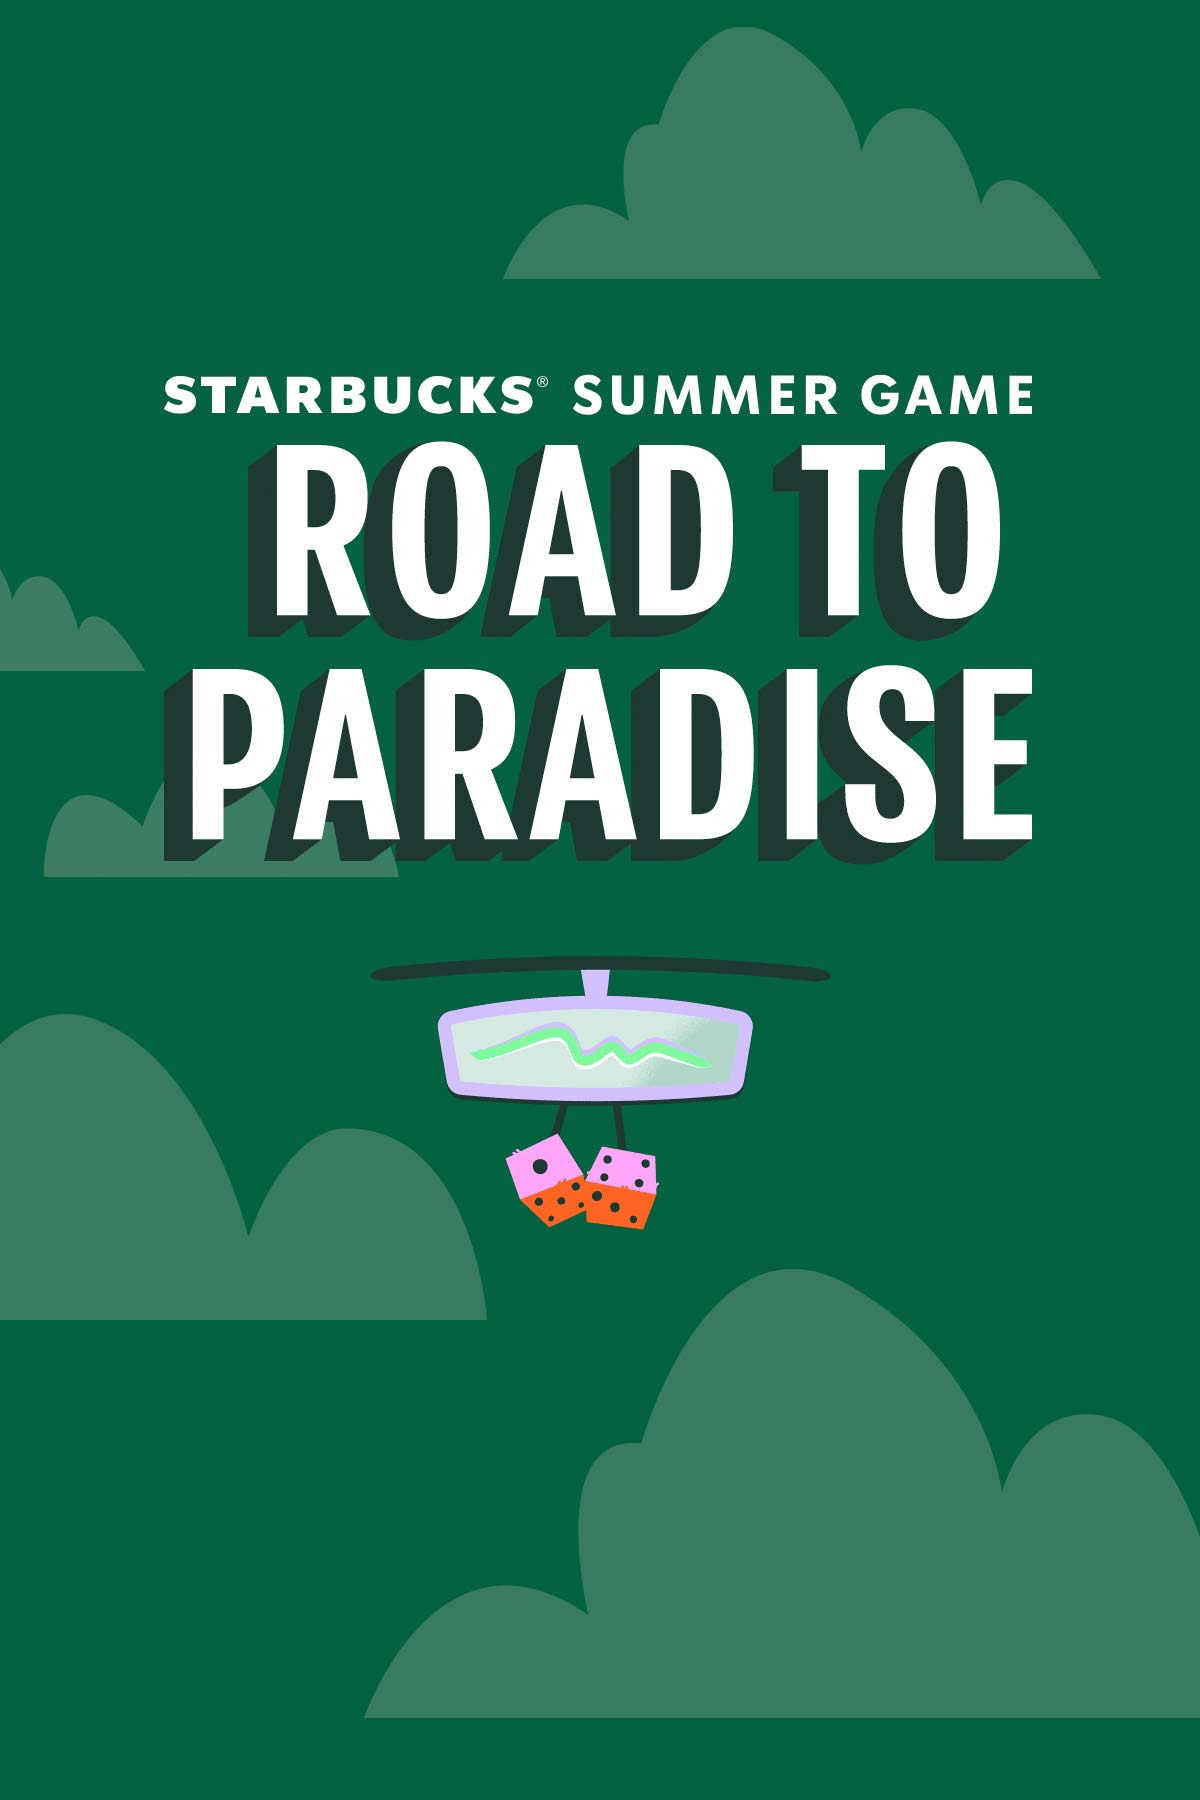 Starbucks Summer Game Road to Paradise tekst op groene achtergrond.